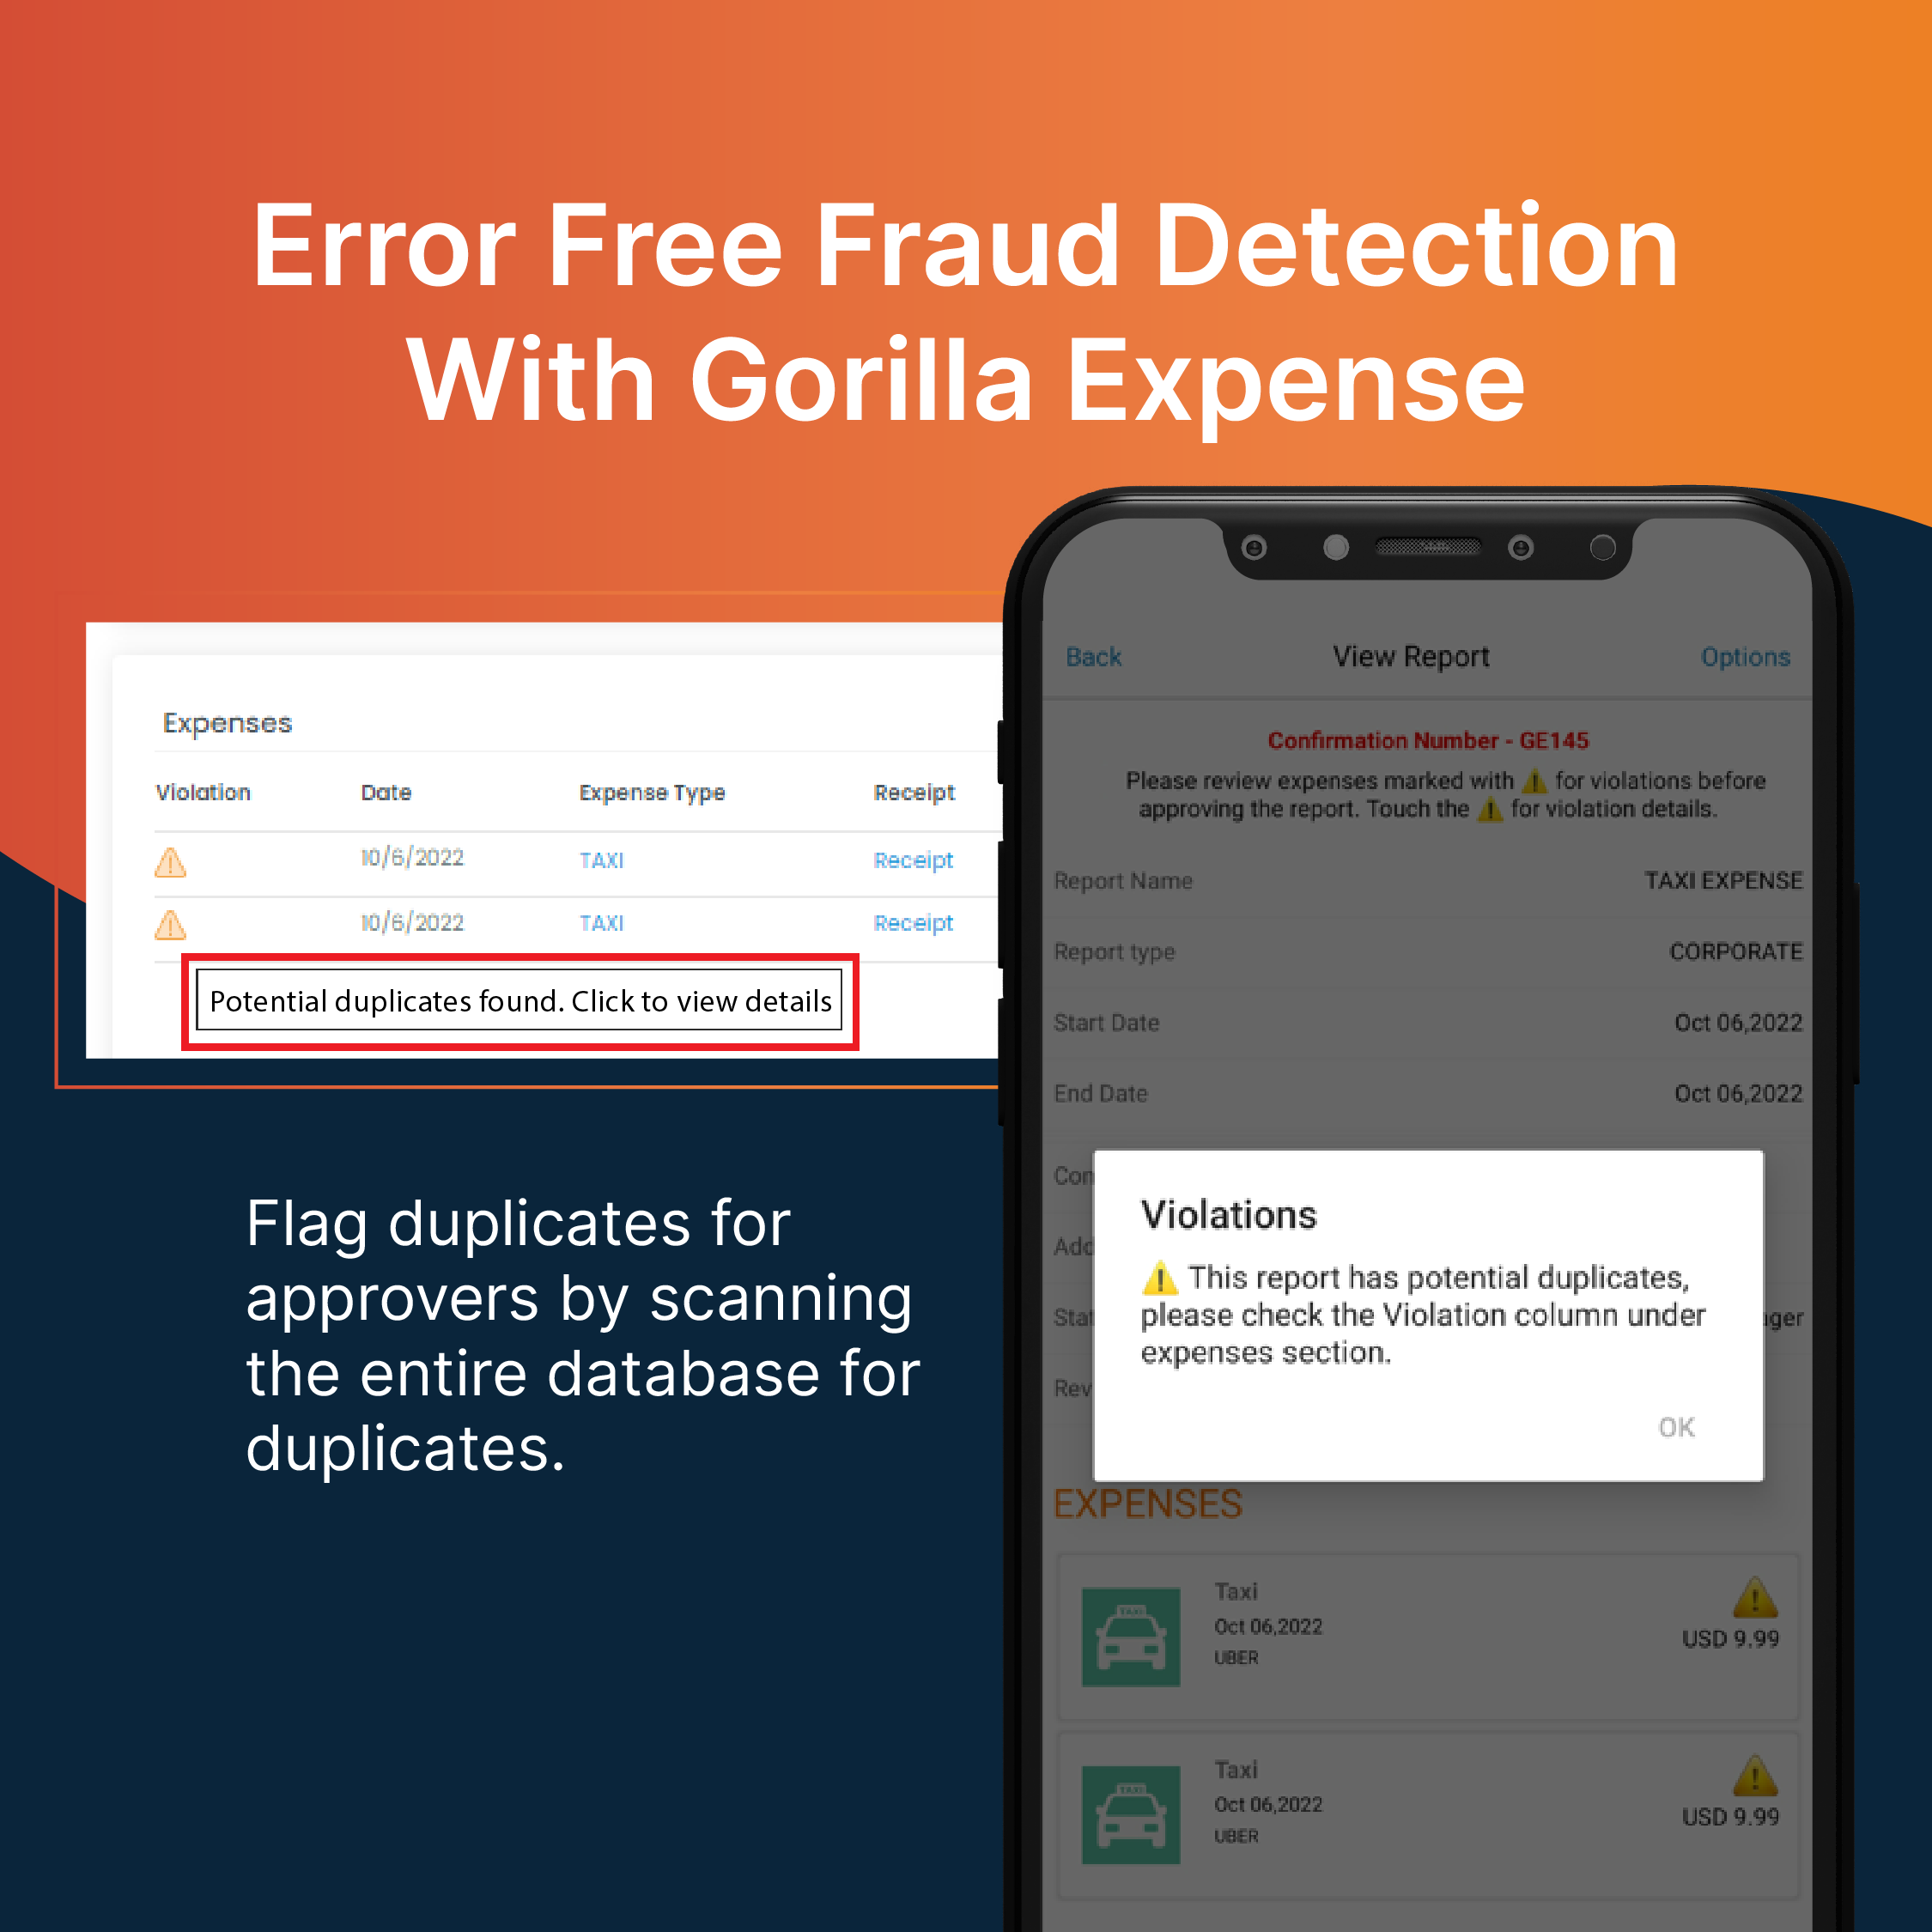 Error-free Fraud Detection with Gorilla Expense